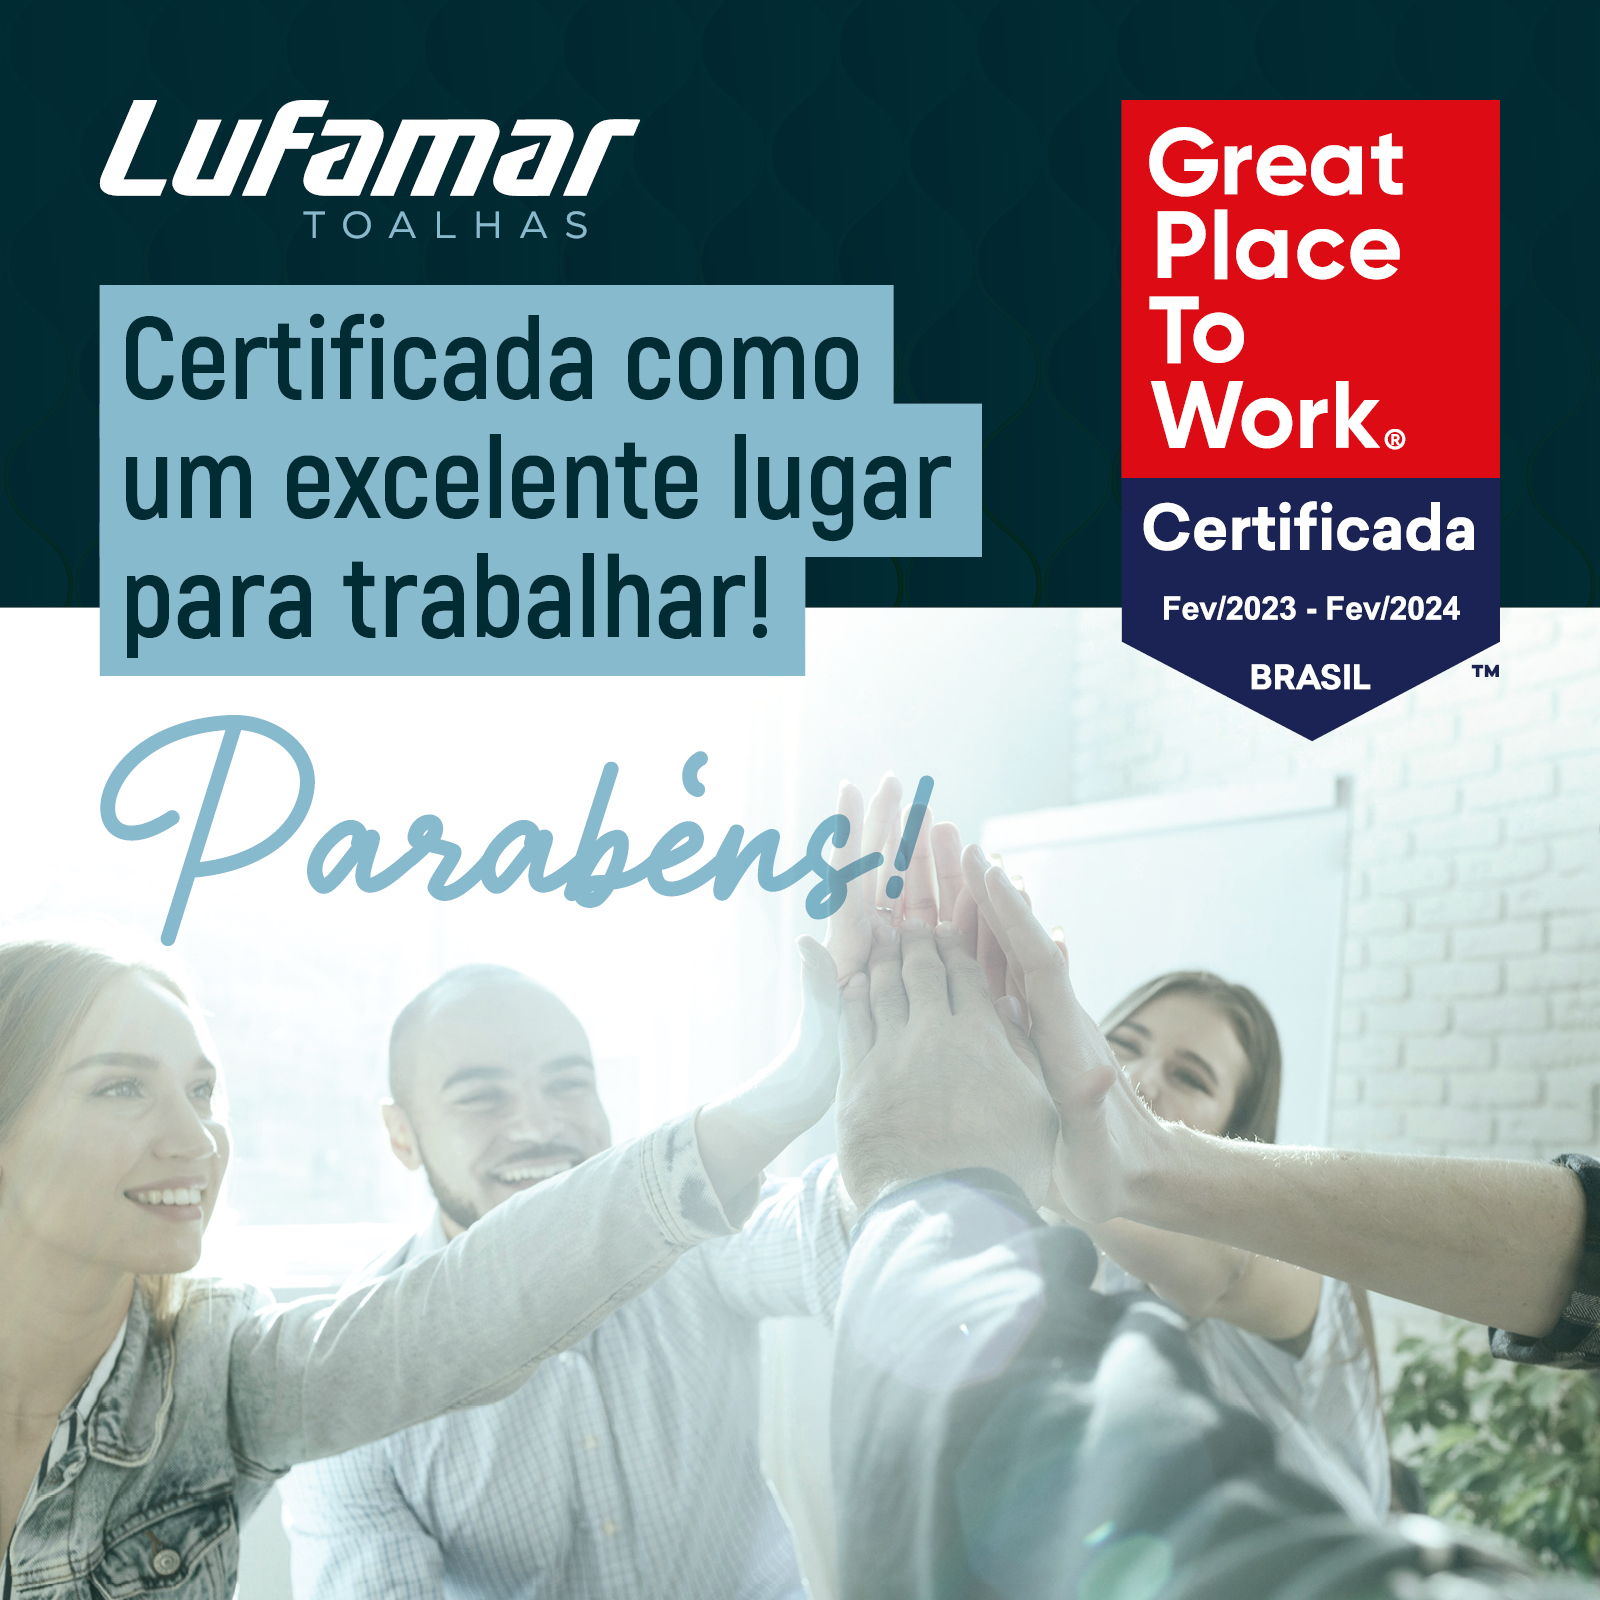 Lufamar recebe o selo Great Place to Work 2023